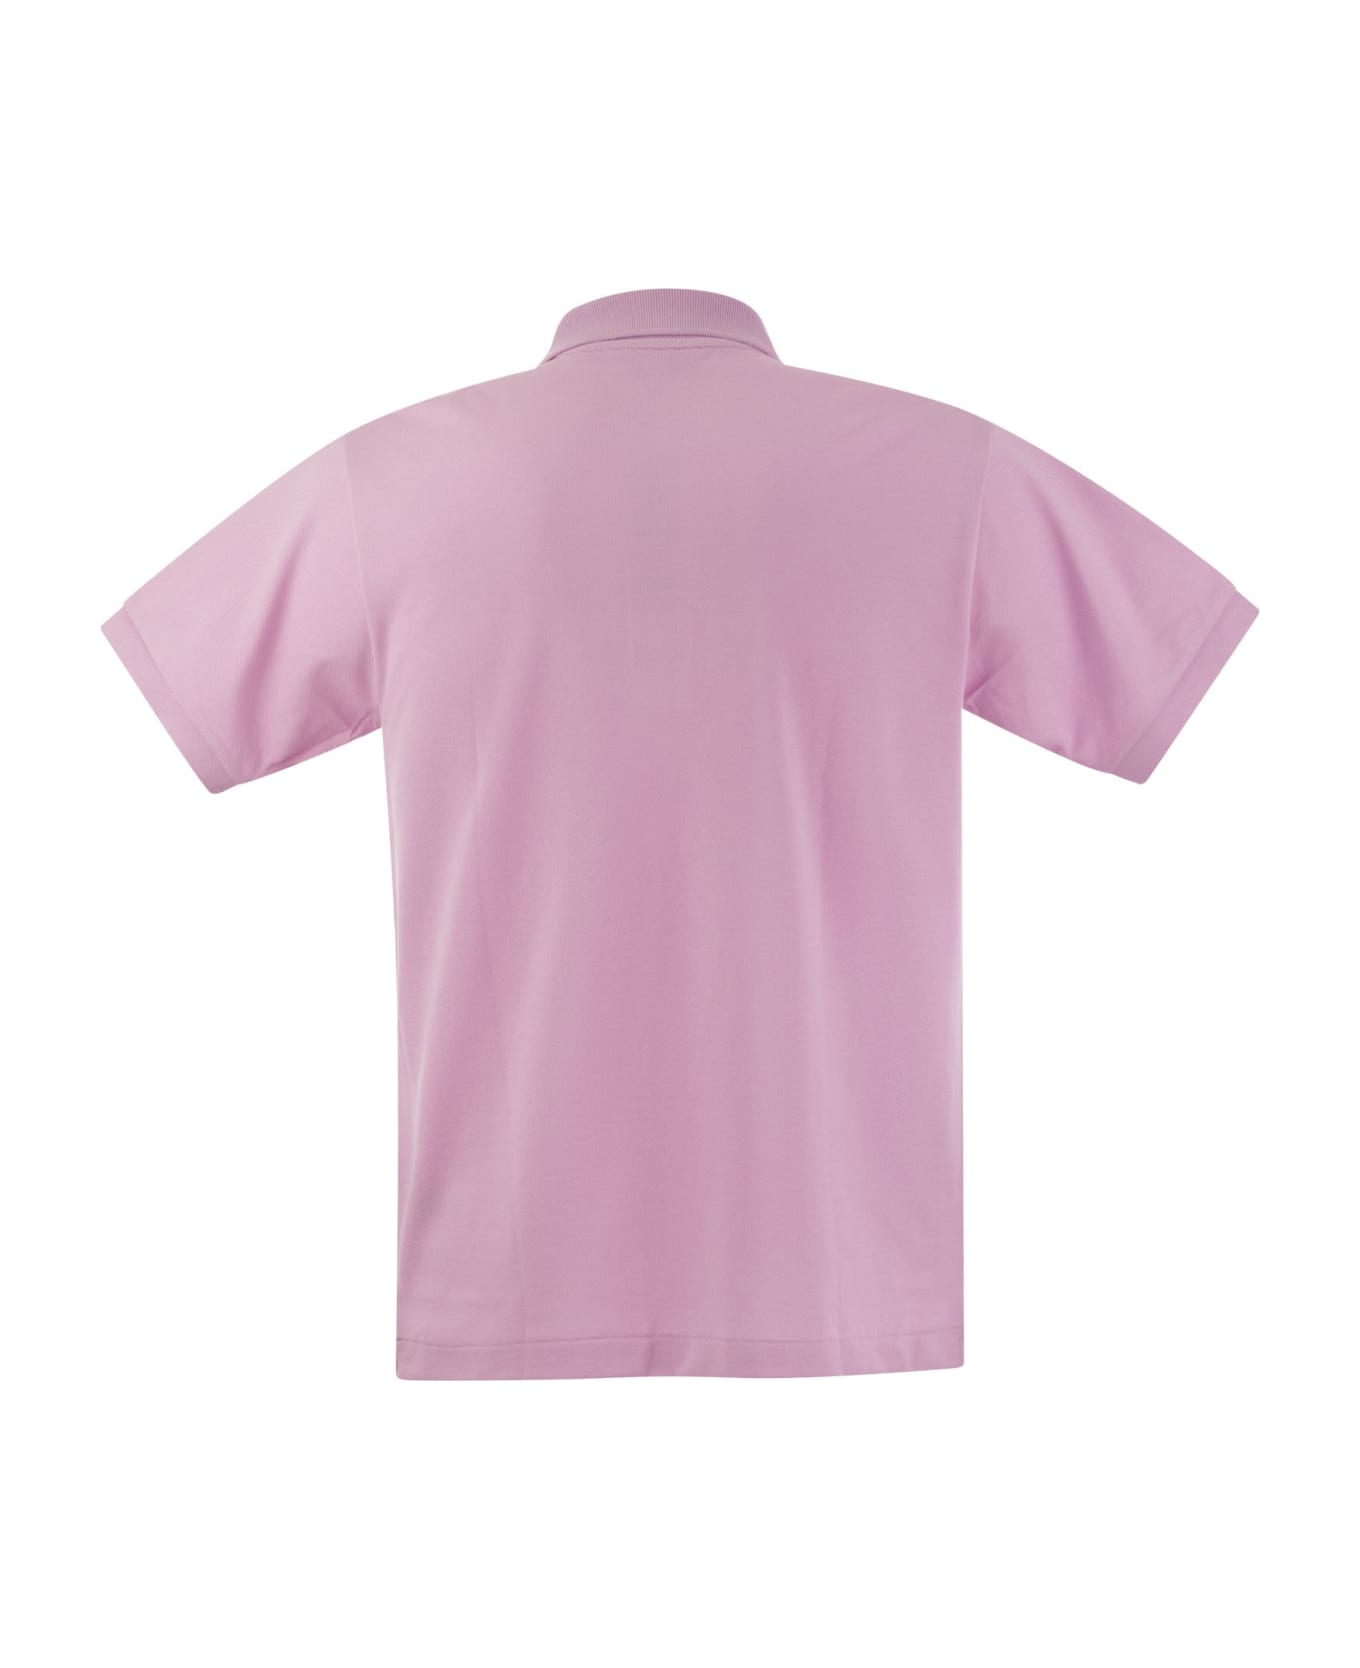 Lacoste Classic Fit Cotton Pique Polo Shirt - Glicine ポロシャツ